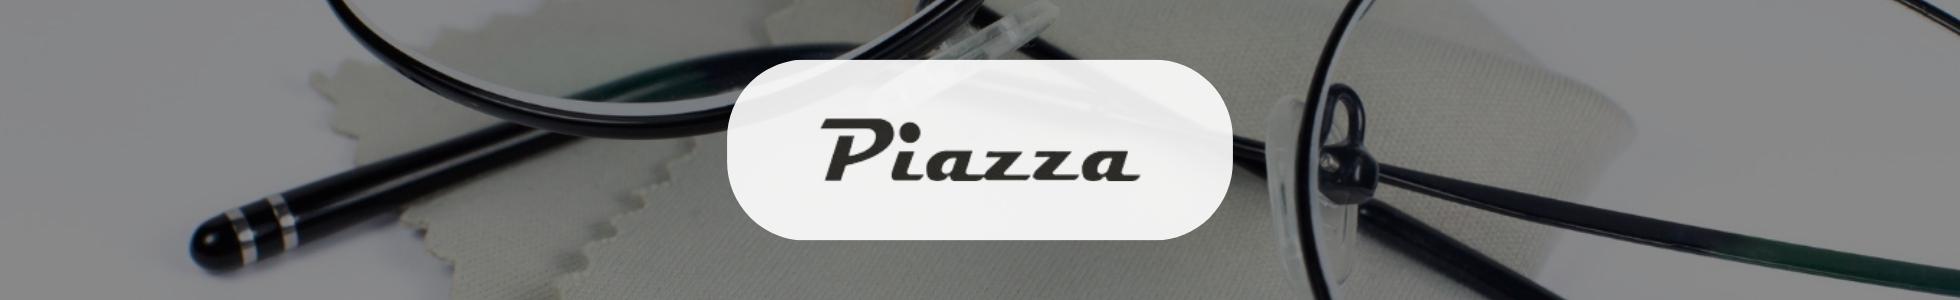 Ottica Piazza San Marino - shop online ricambi occhiali